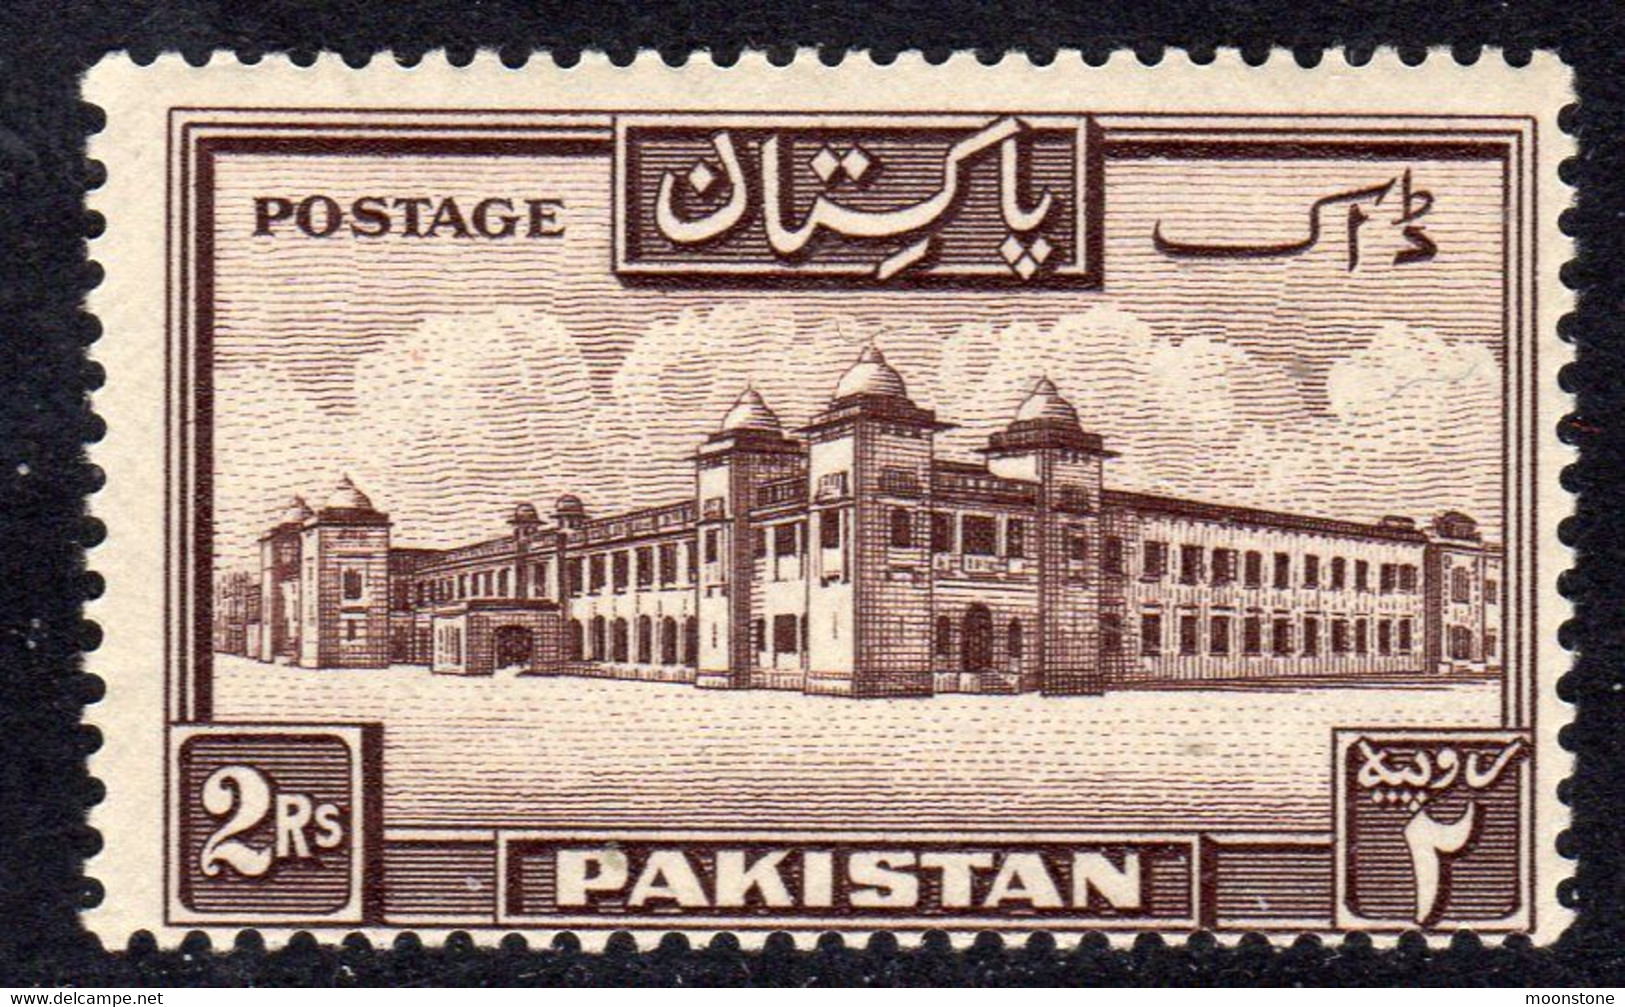 Pakistan 1948 2 Rupees Chocolate Definitive, Perf. 14, MNH, SG 39 (E) - Pakistan